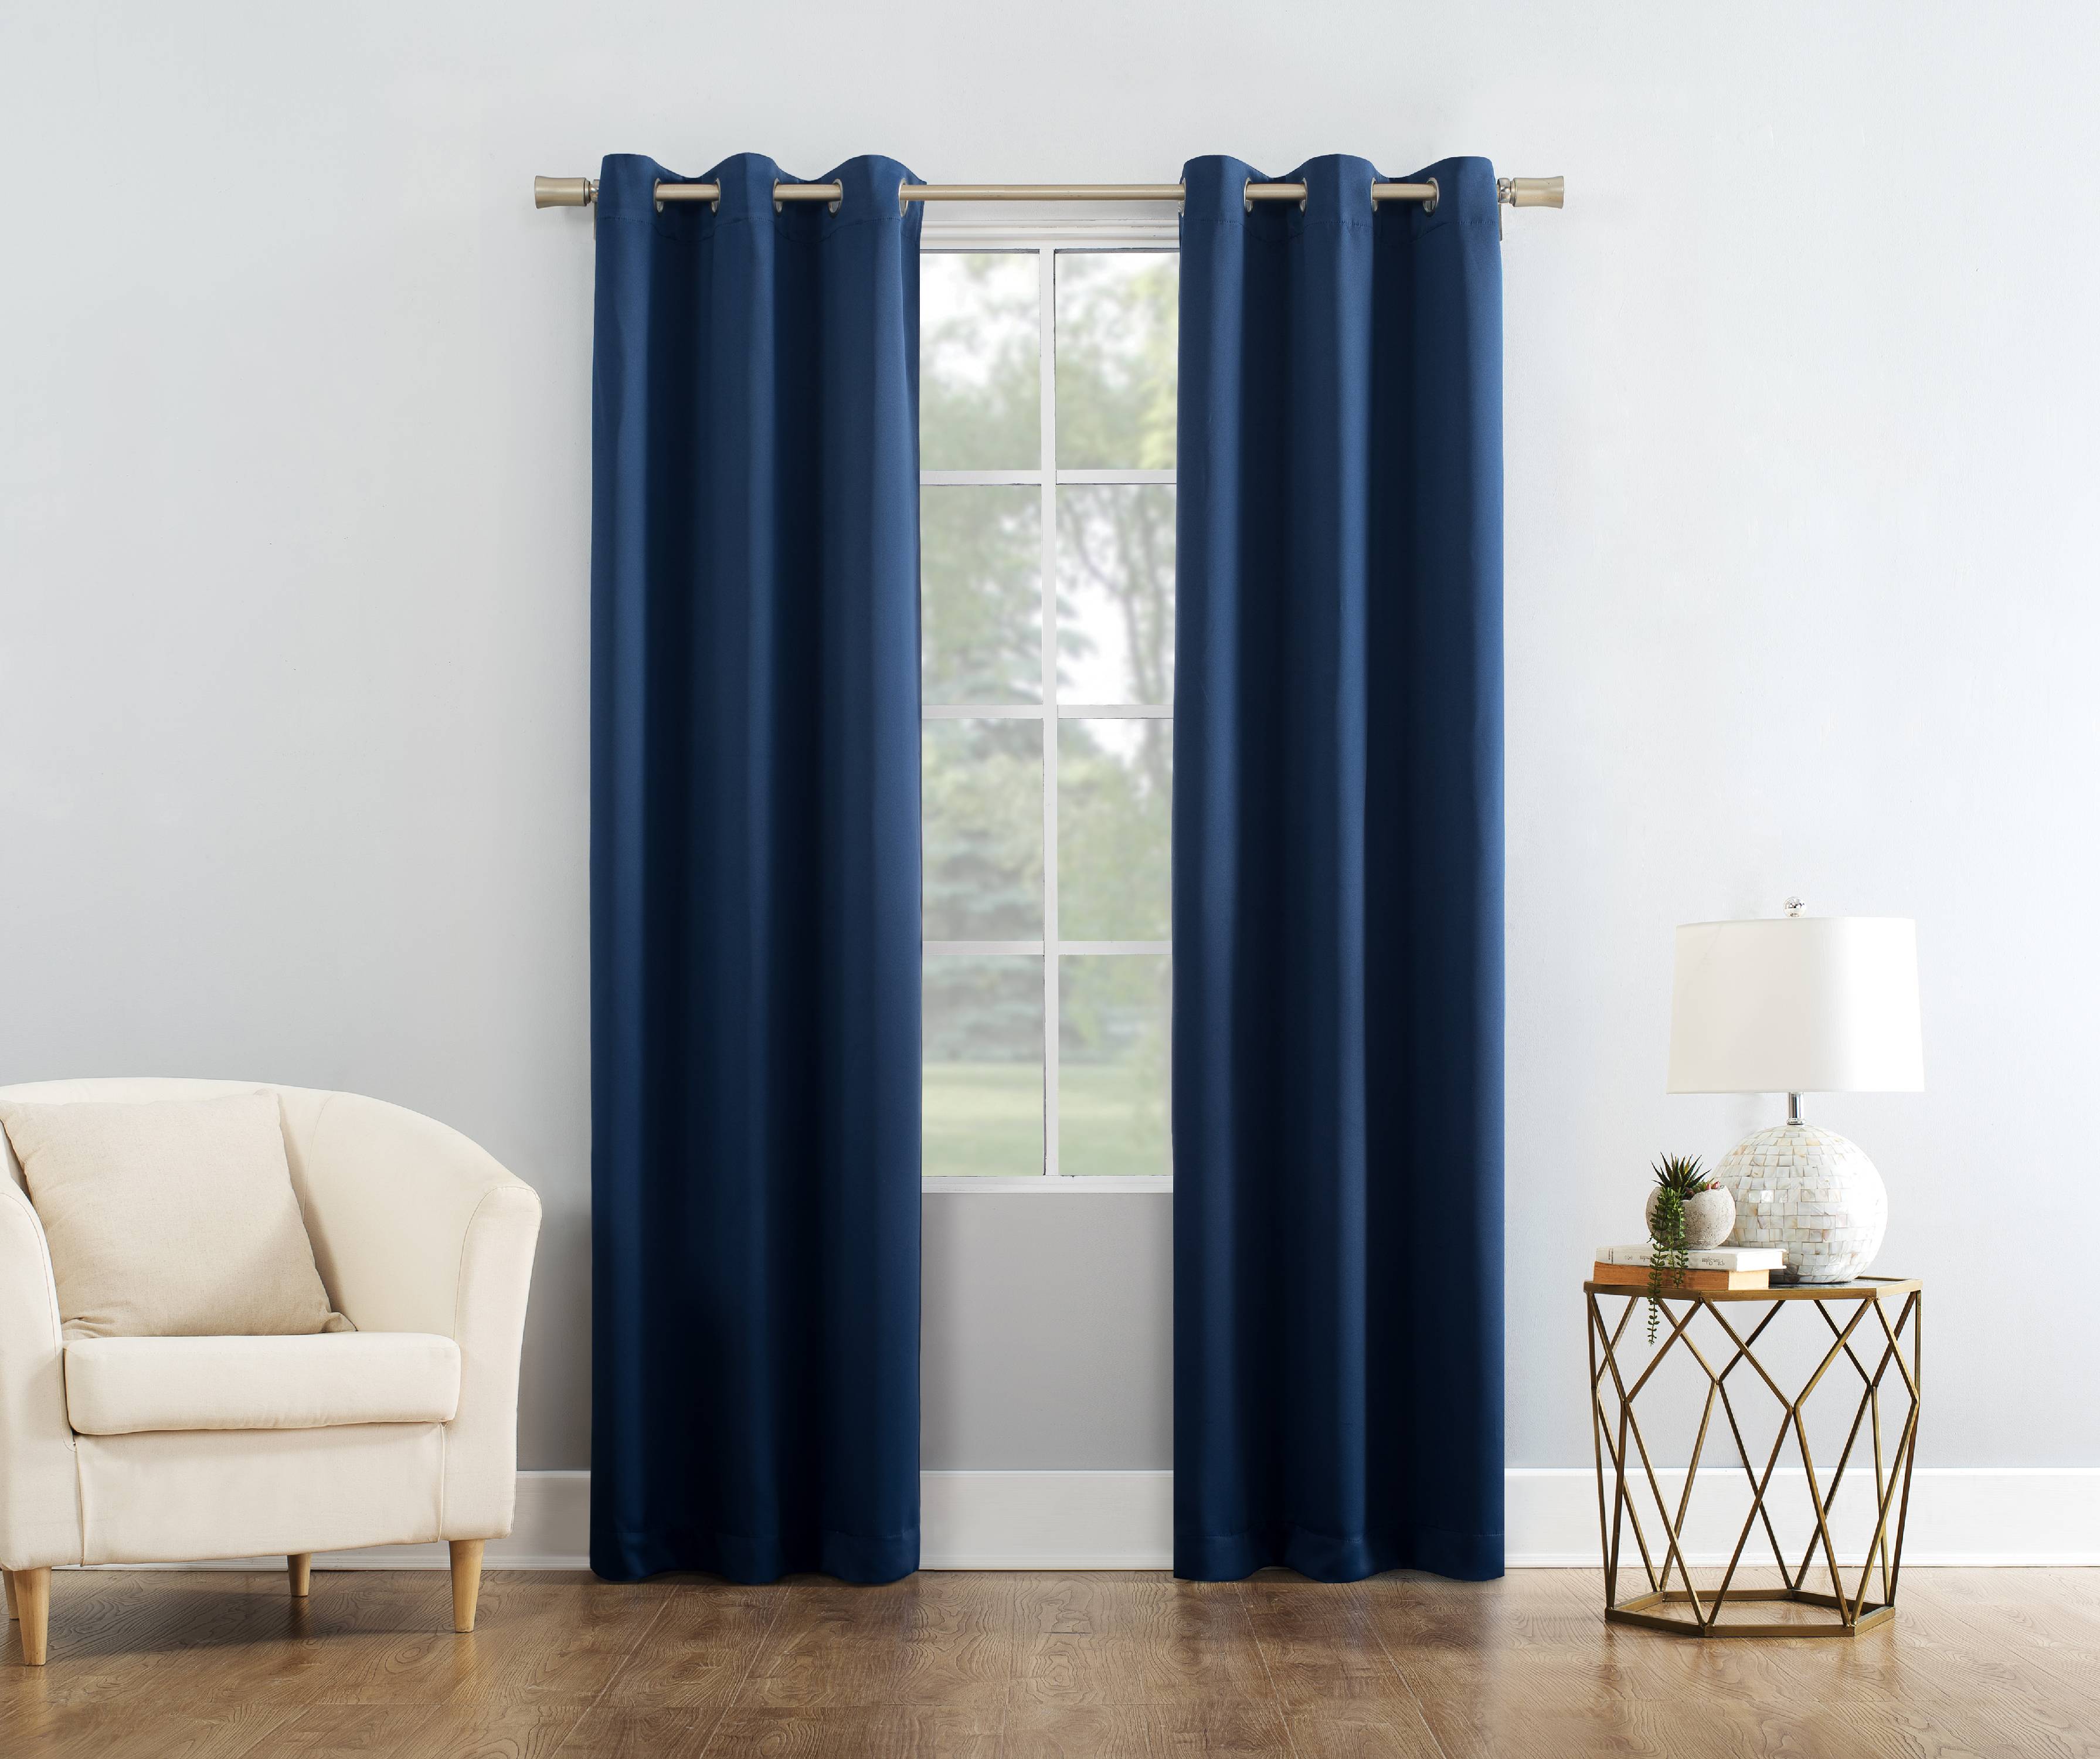 Mainstays Blackout Energy Efficient Grommet Single Curtain Panel, 40"x95", Blue - image 5 of 7